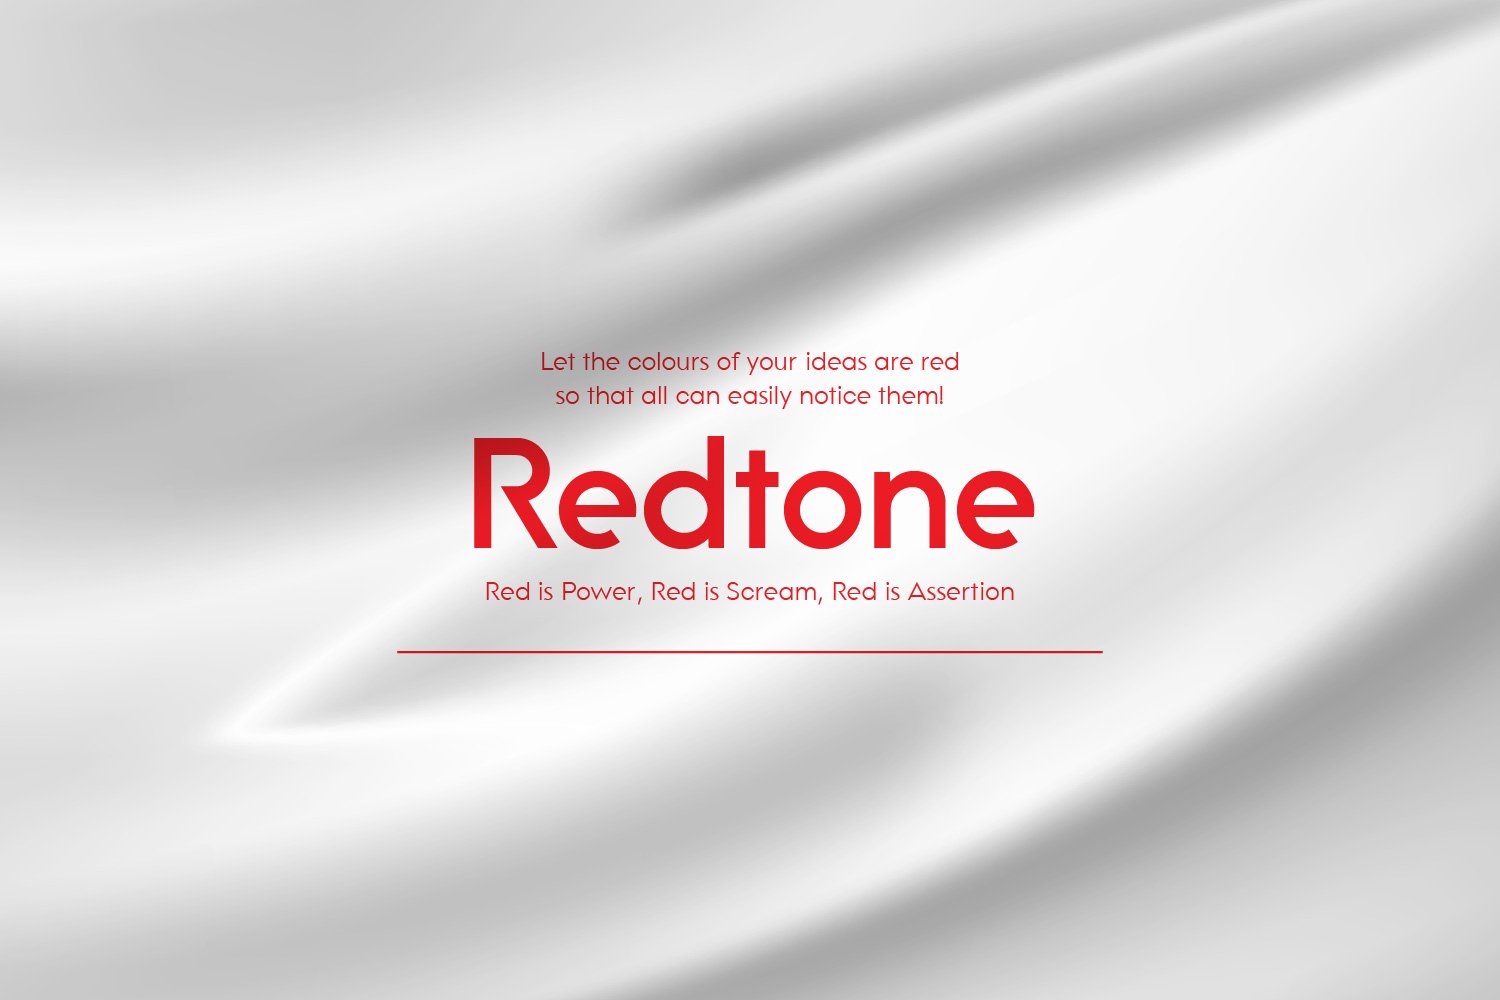 Redtone Geometric Sans Serif Family